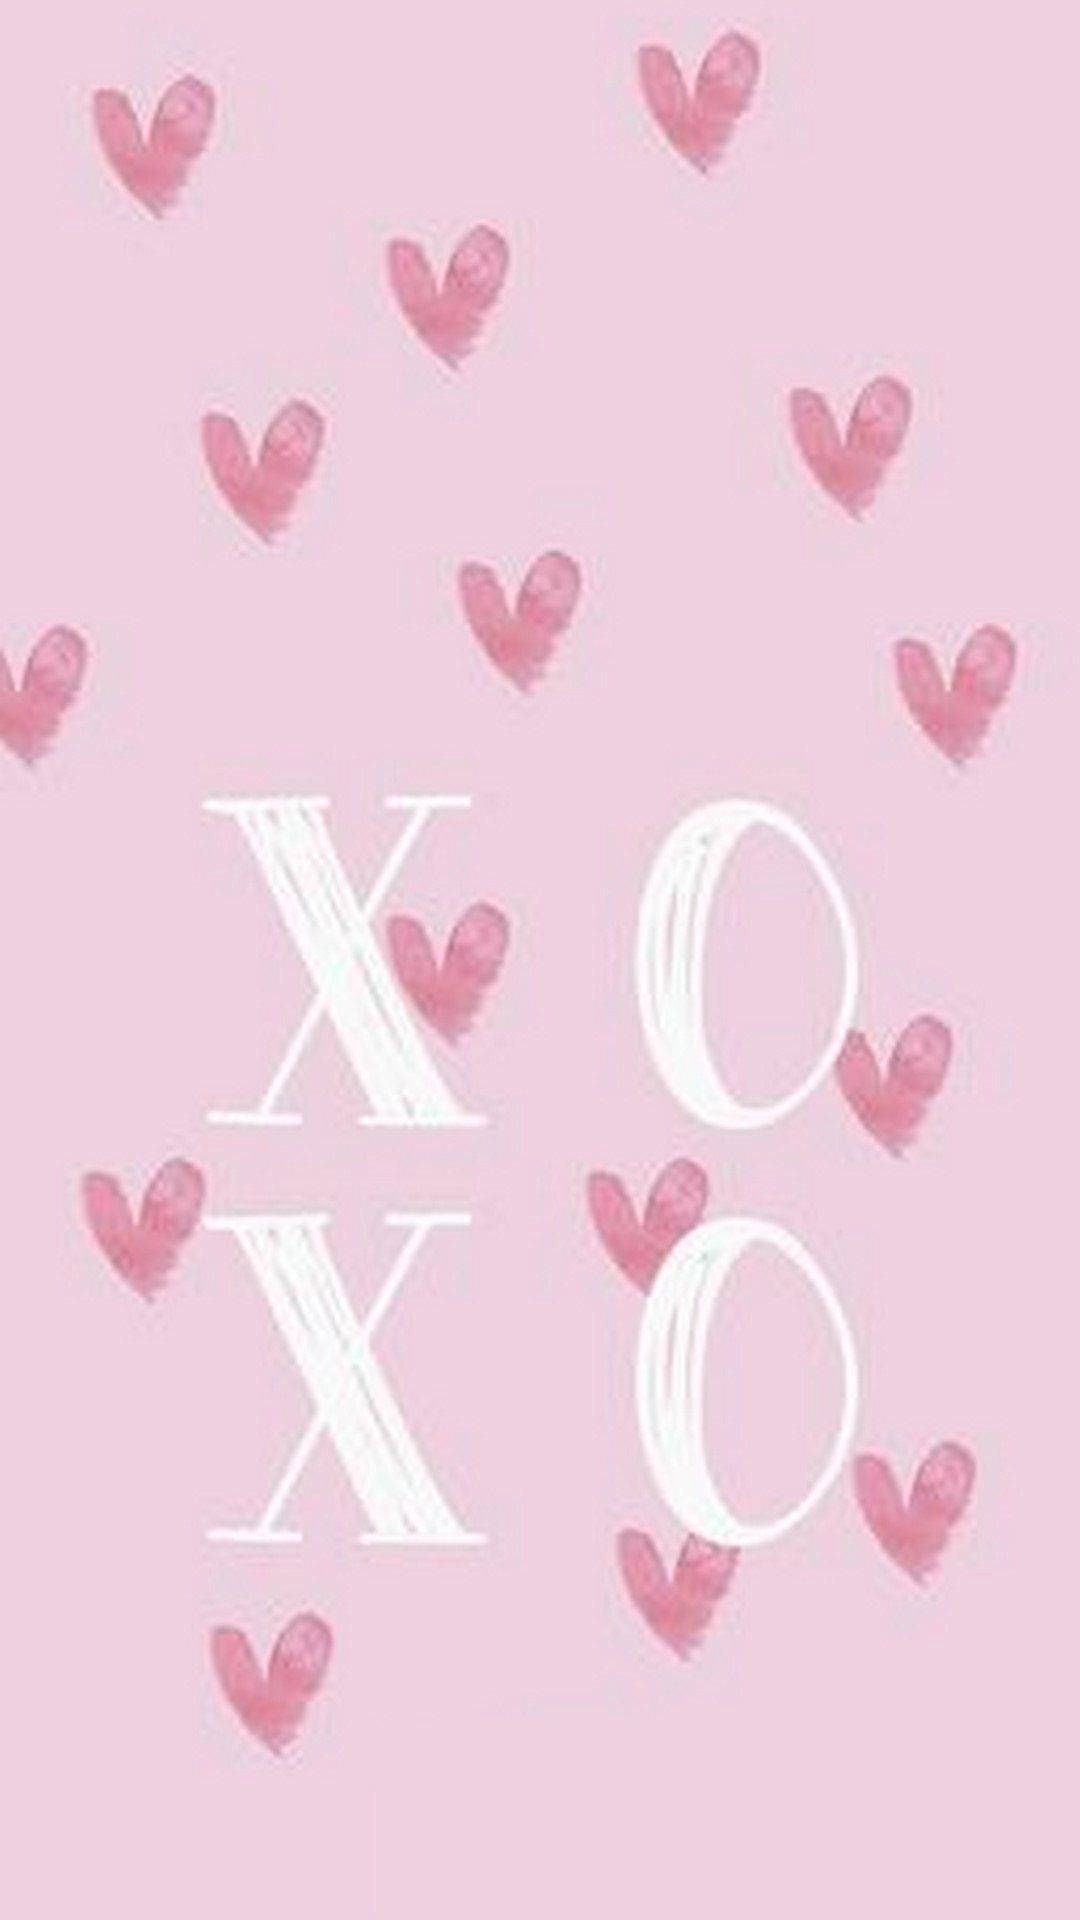 Caption: Romantic Pastel Pink Heart Wallpaper Background